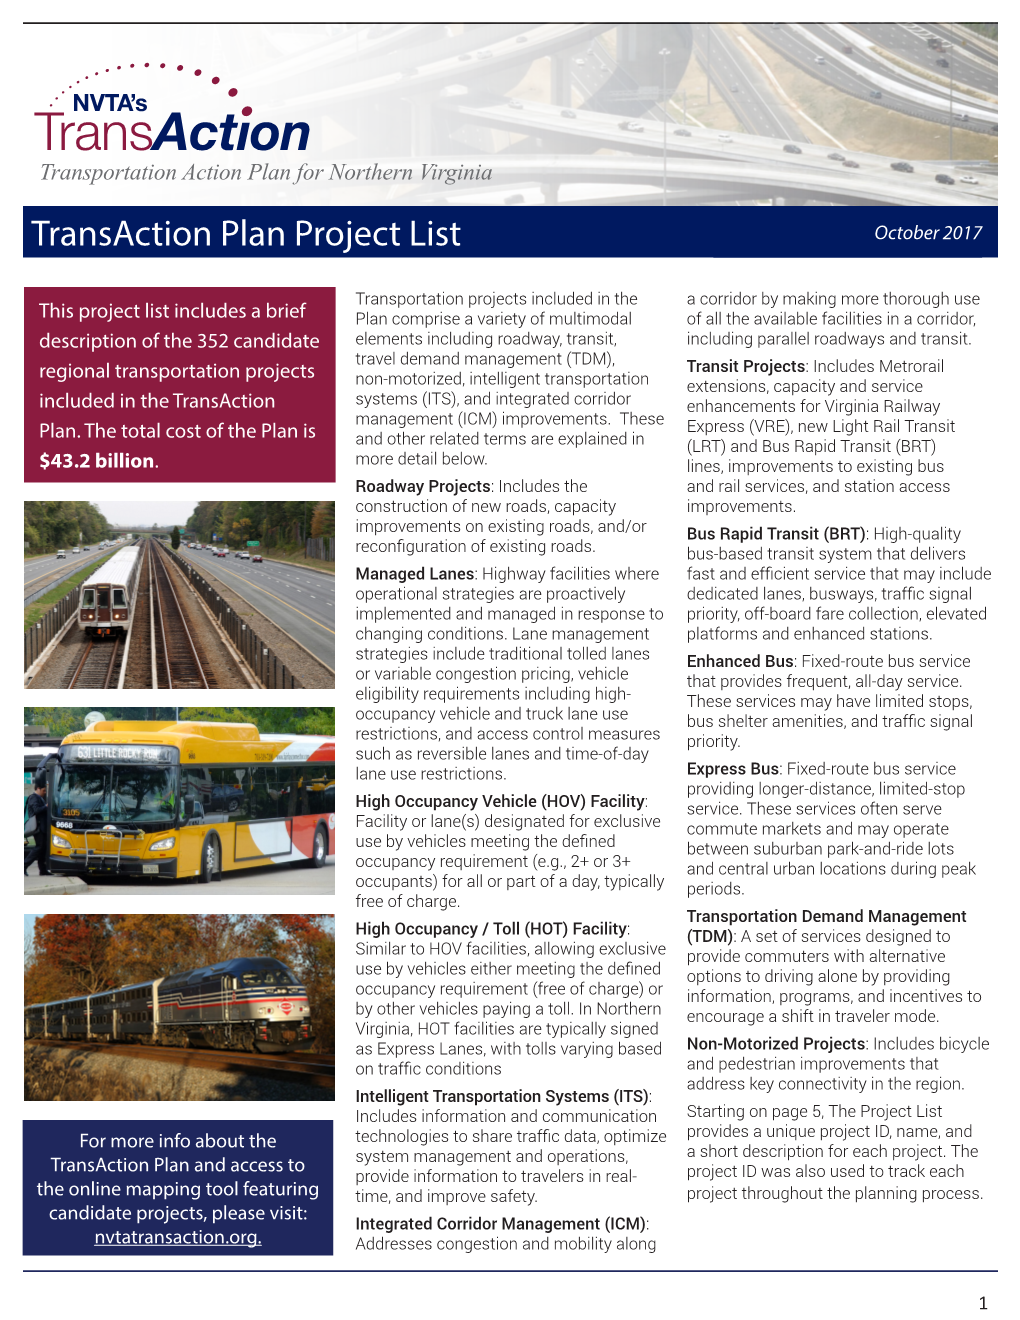 Transaction Plan Project List October 2017